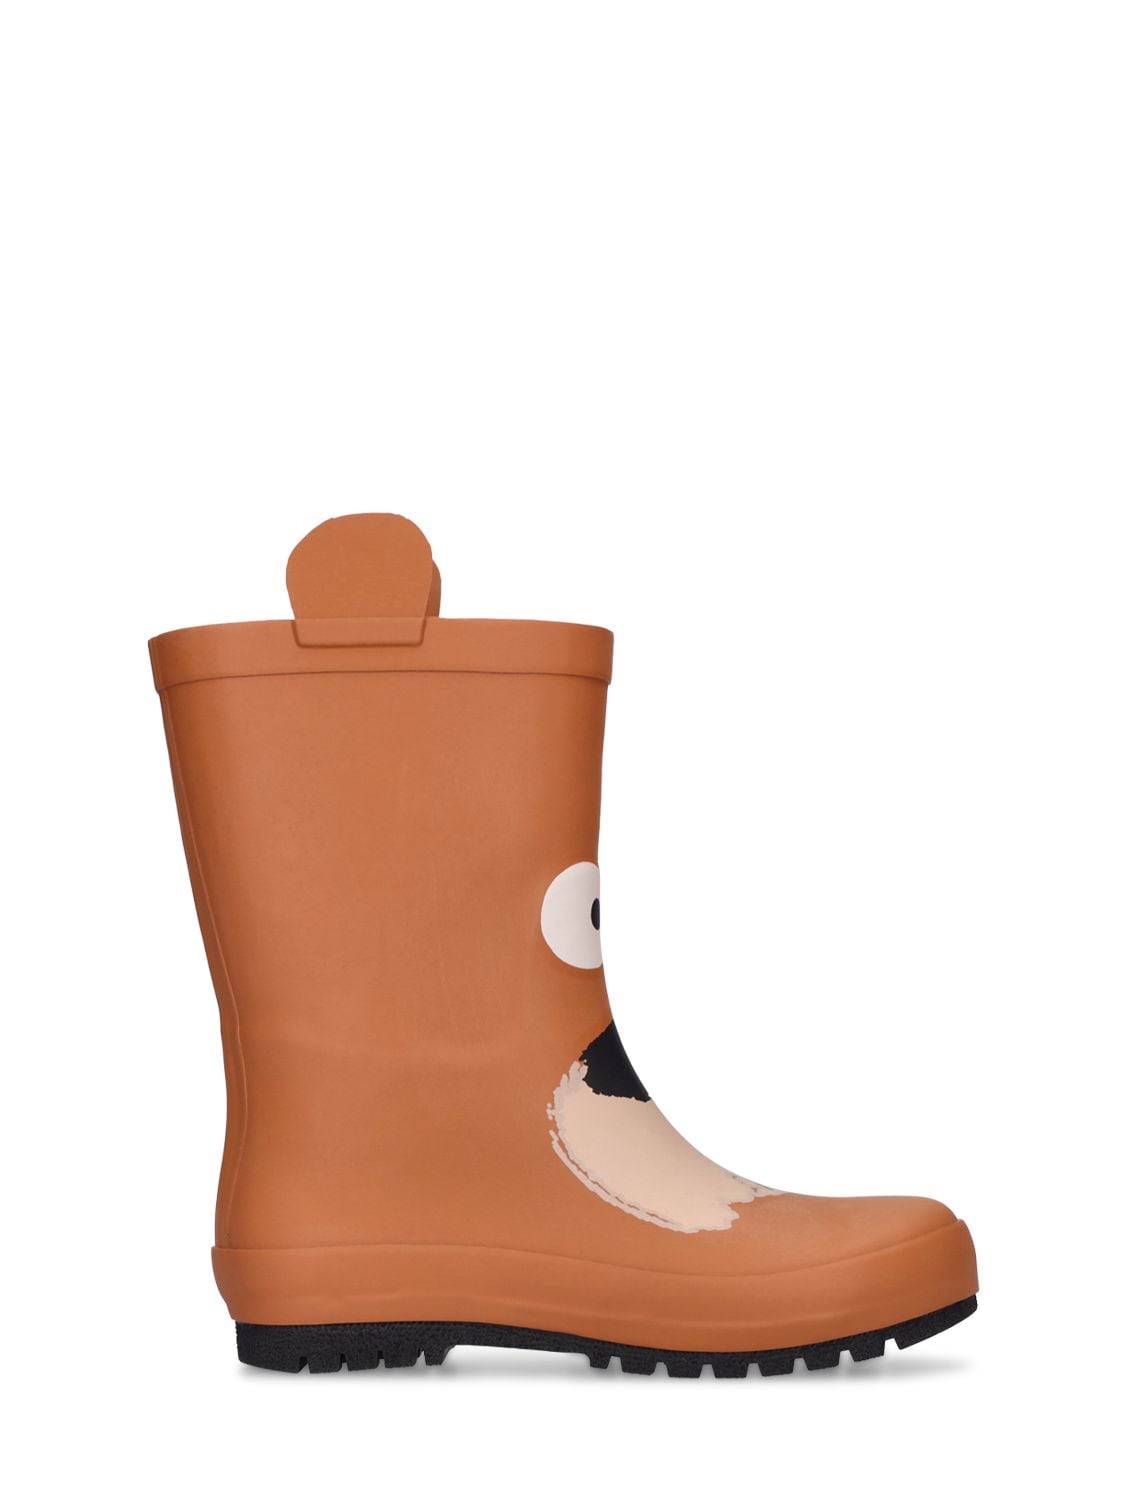 Image of Bear Print Rubber Rain Boots